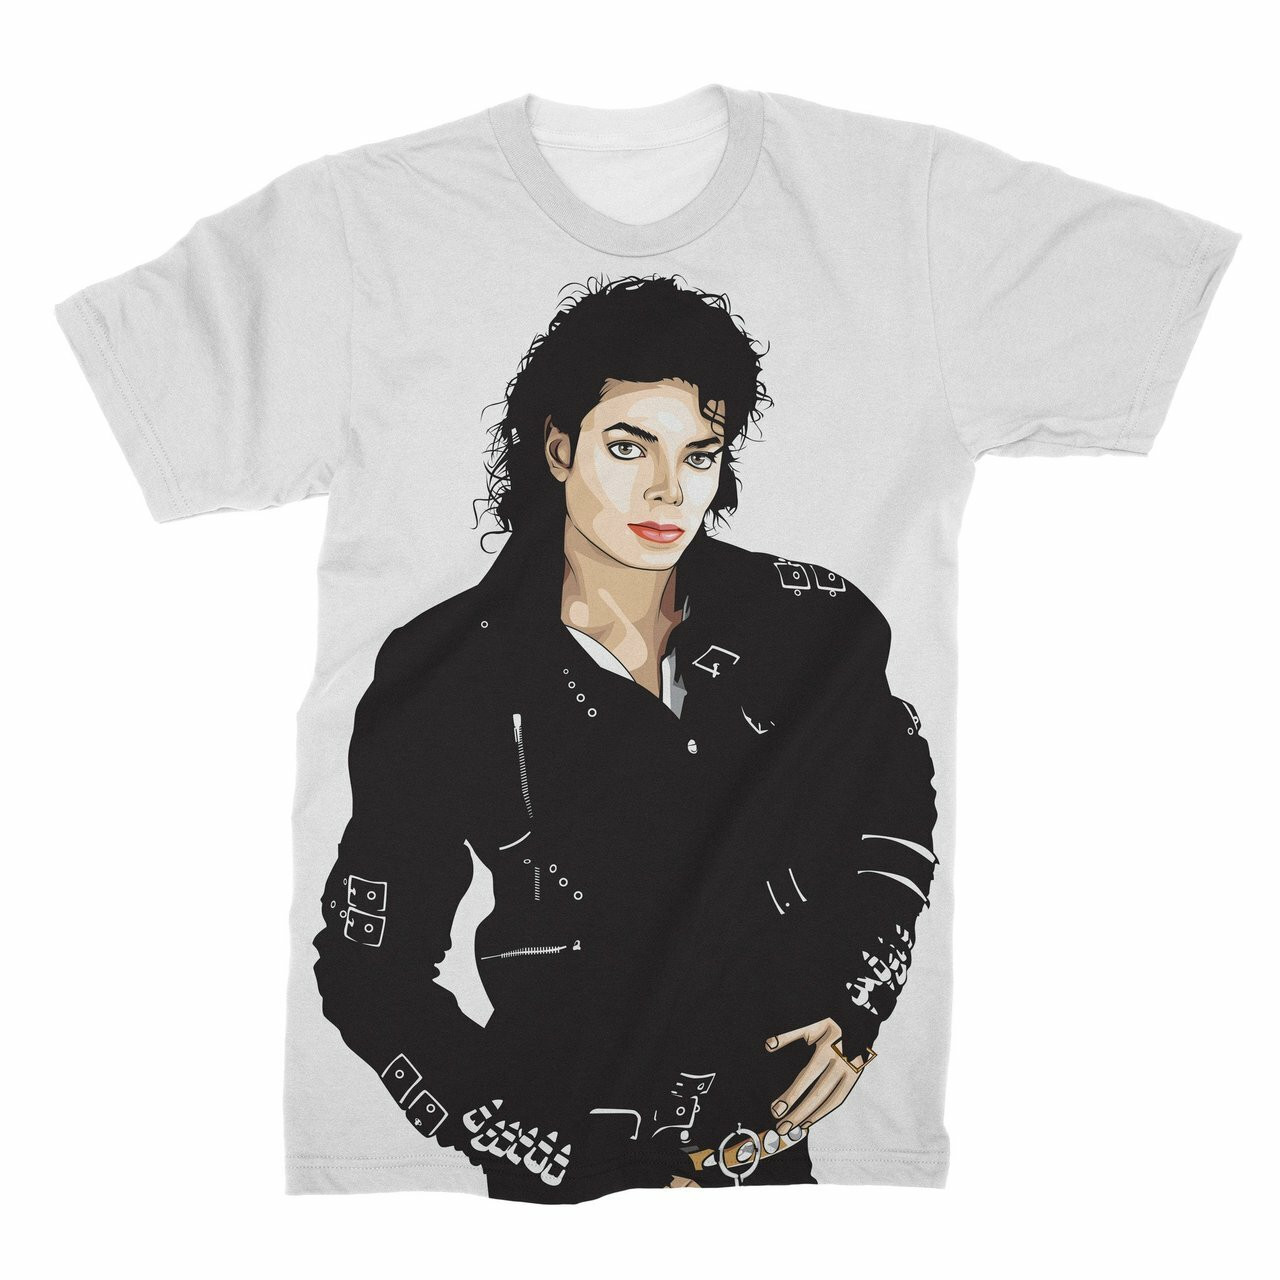 Michael Jackson T Shirt “In Loving Memory”. Sz L. Black with Graphics